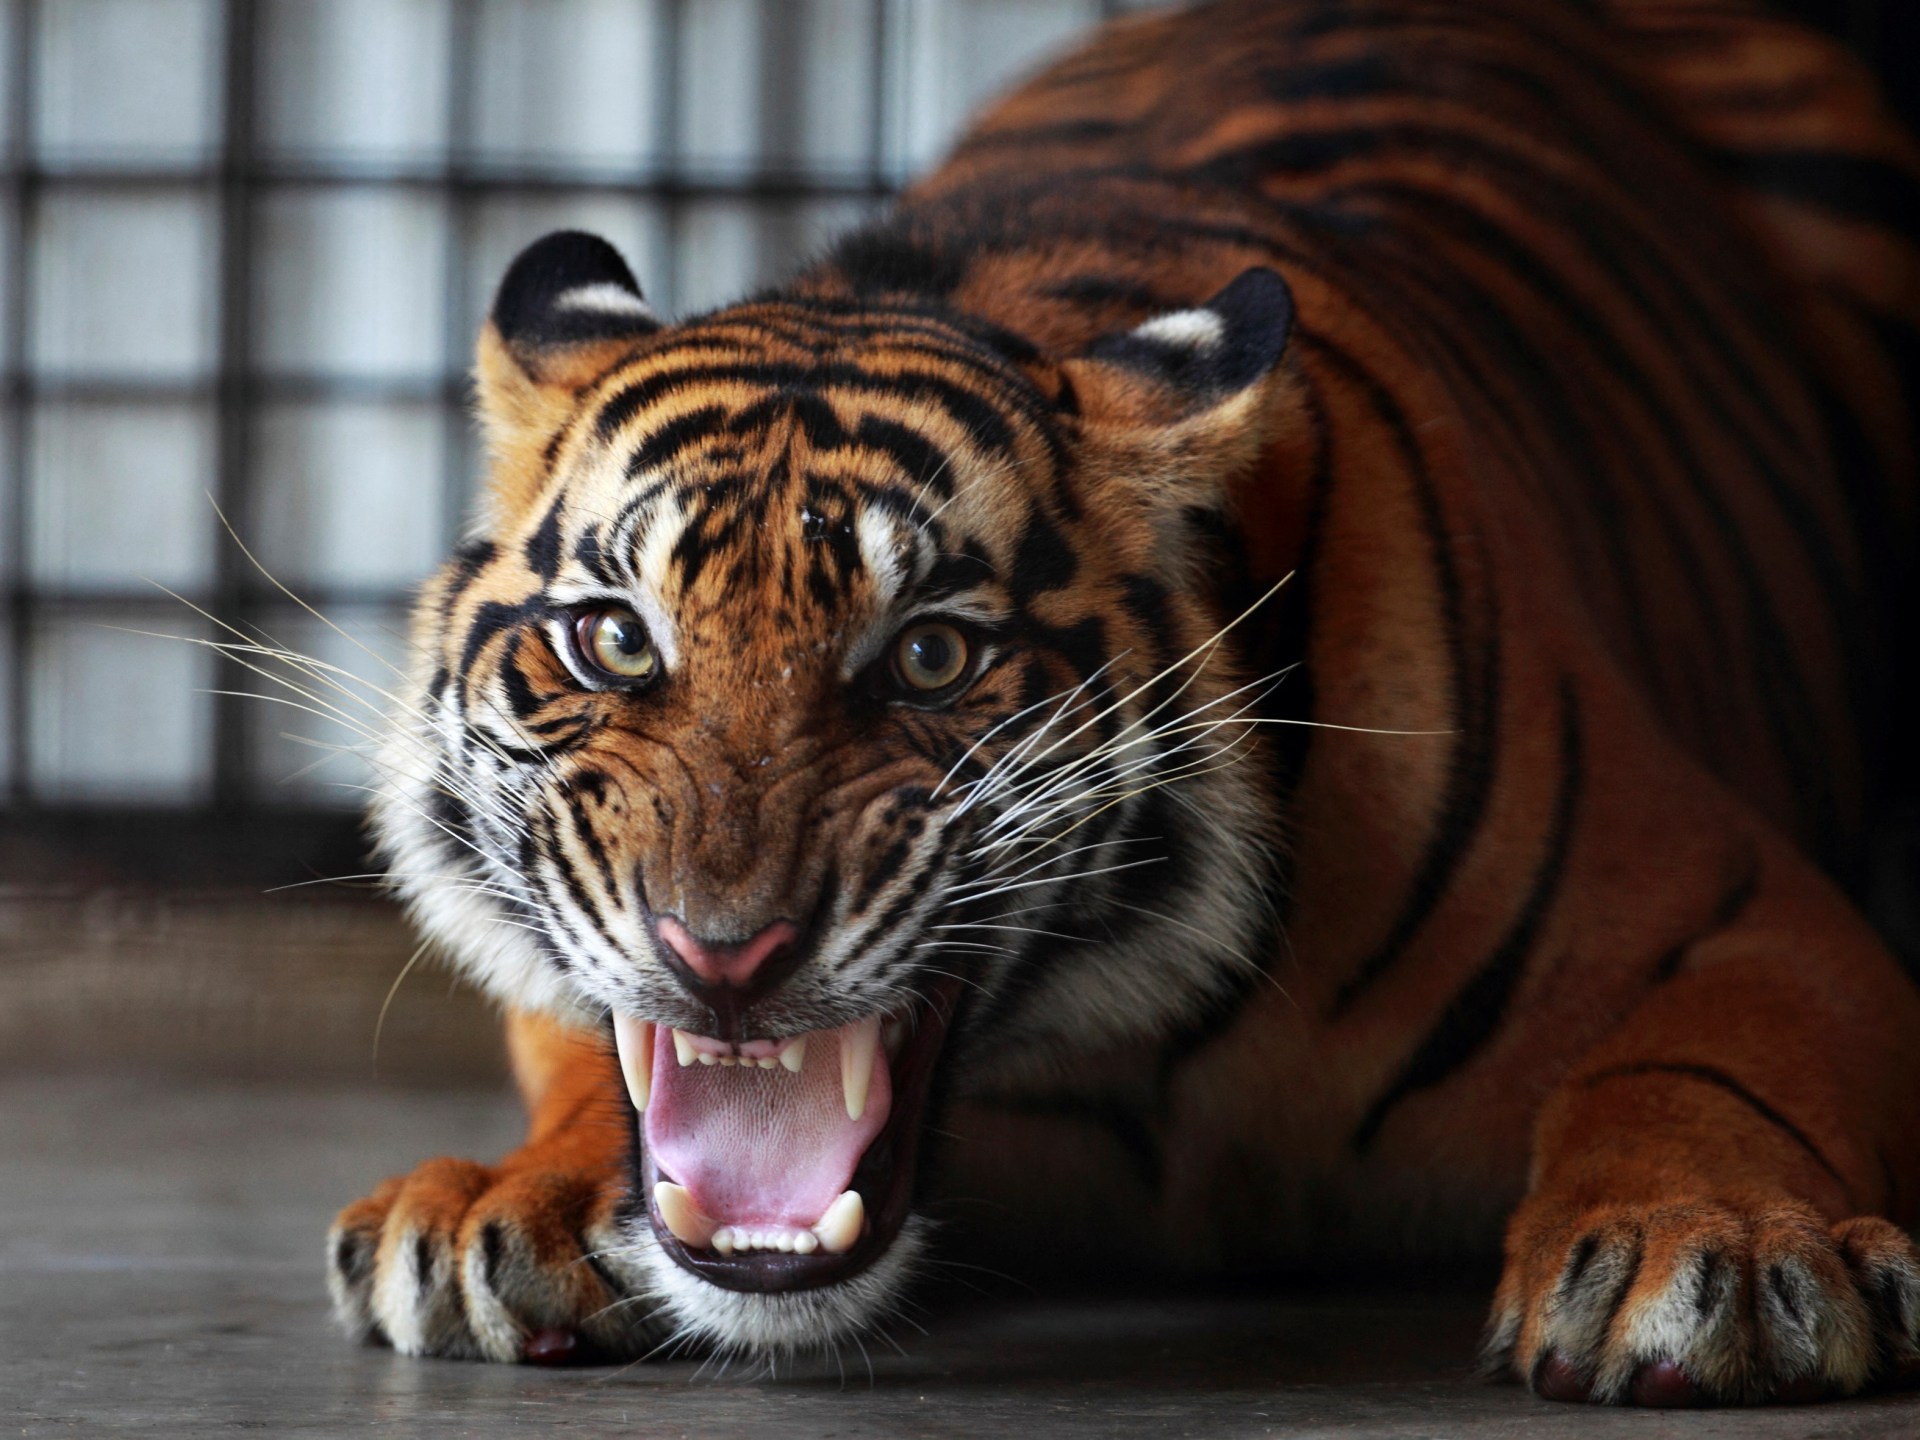 Indonesia hunts ‘extinct’ Javan tiger